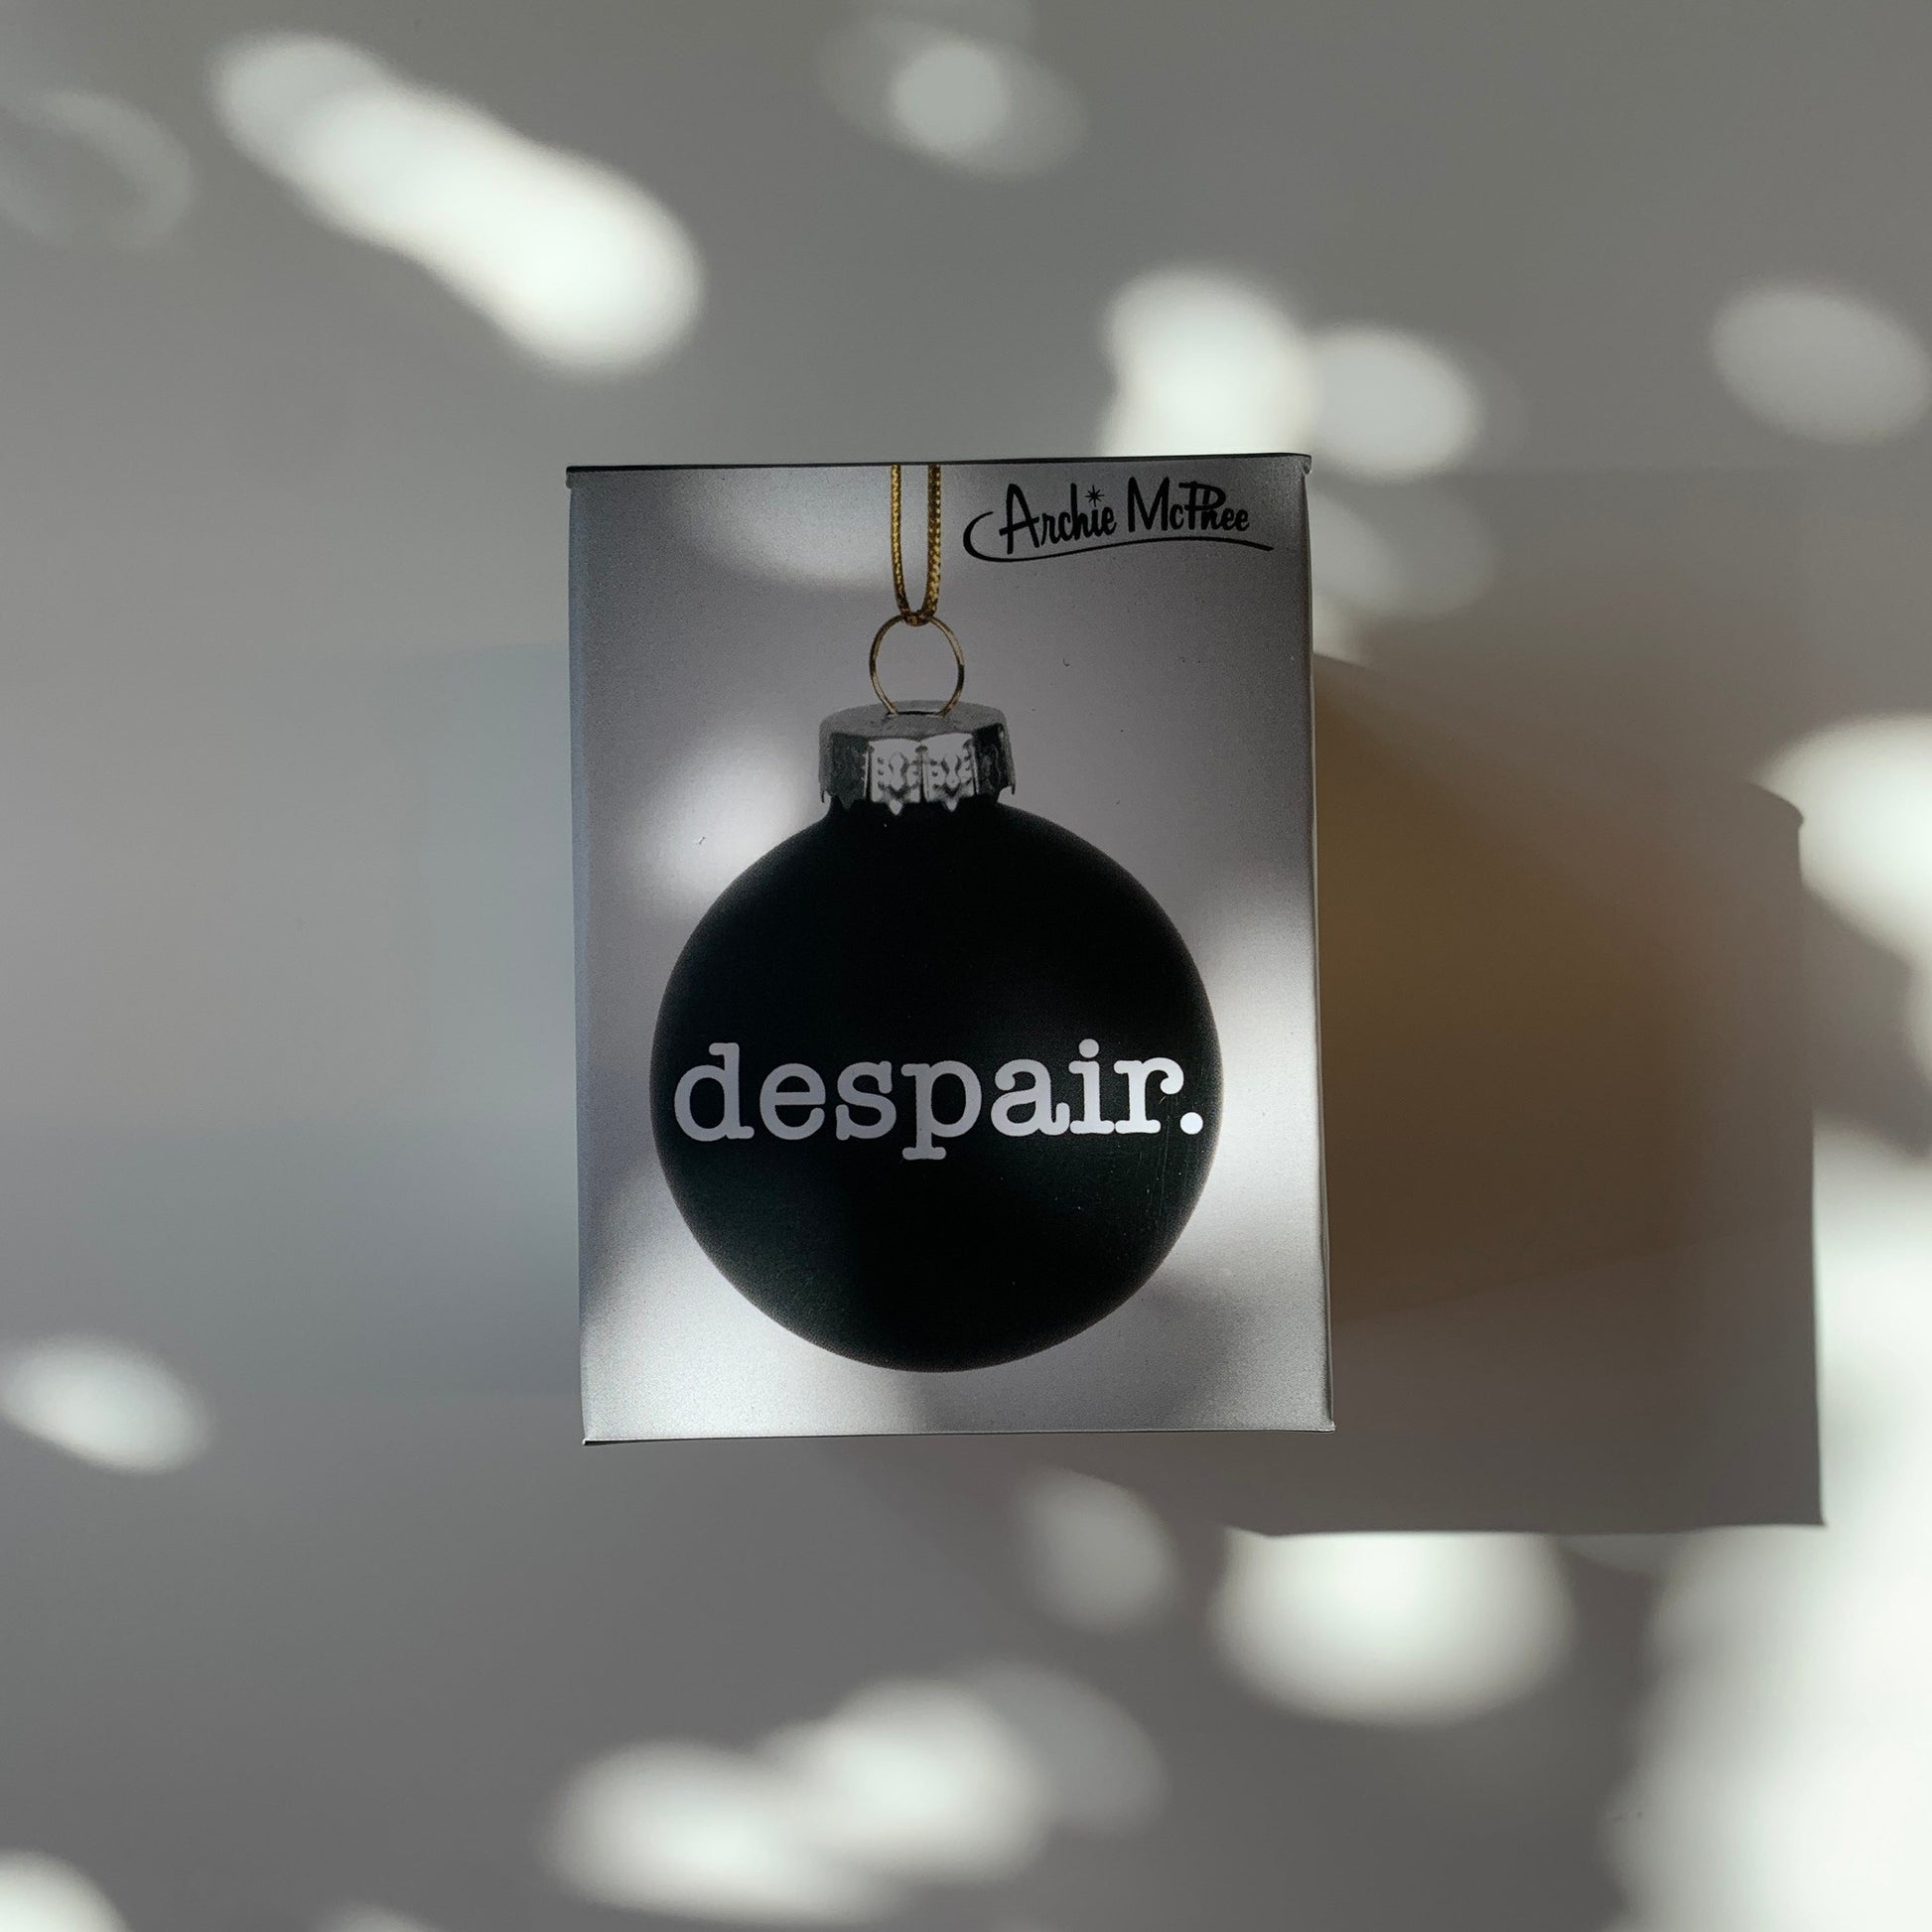 Despair Holiday Mini Glass Ornament in Black